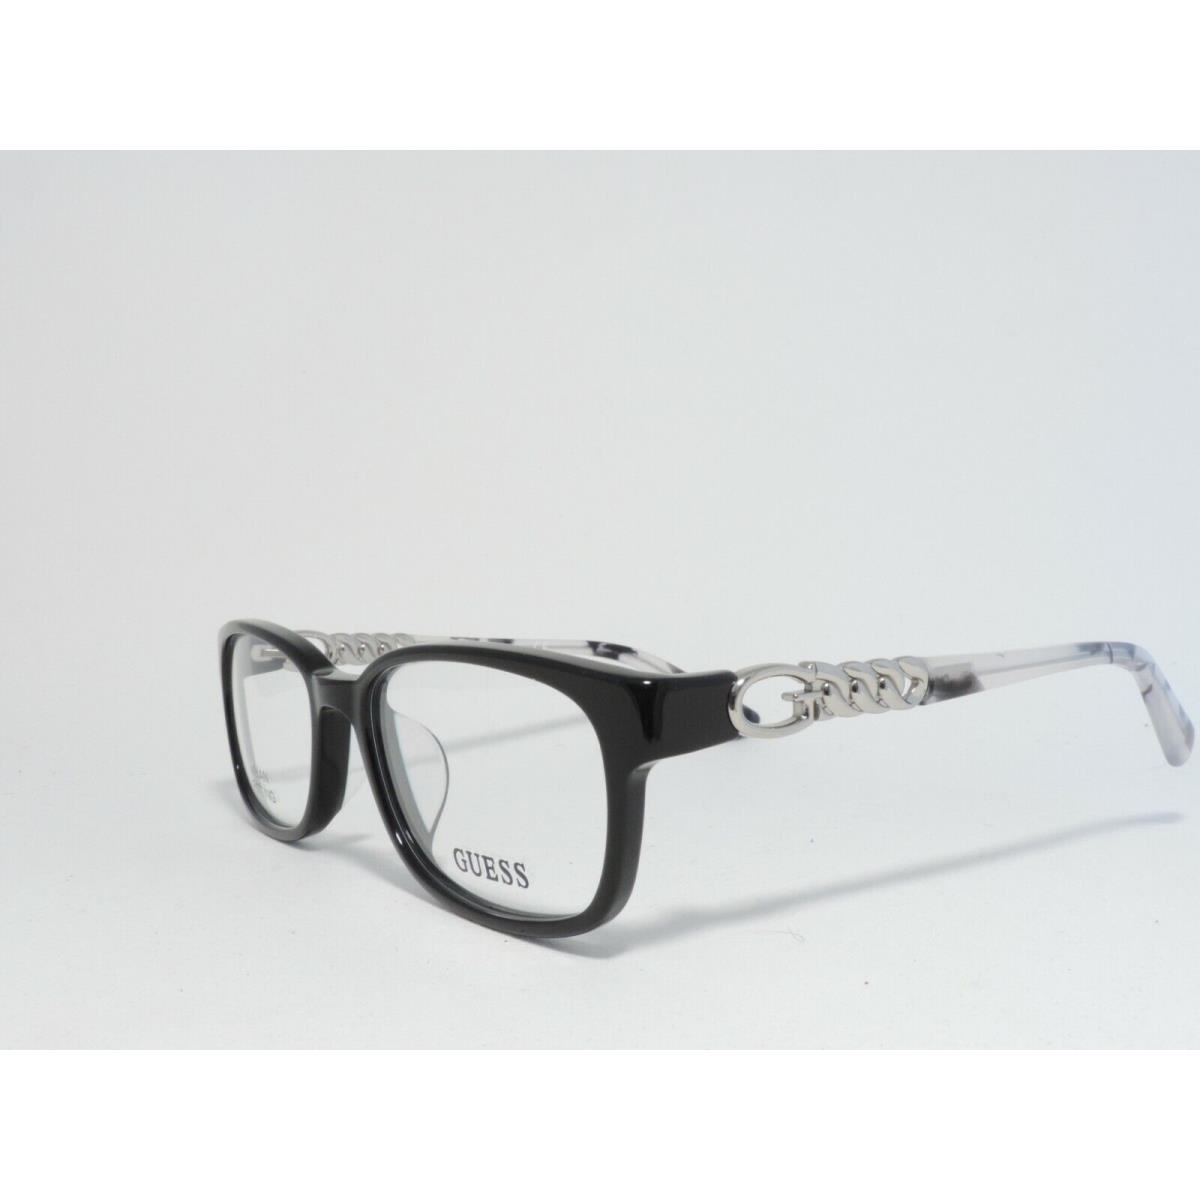 Guess eyeglasses  - Black Frame 0